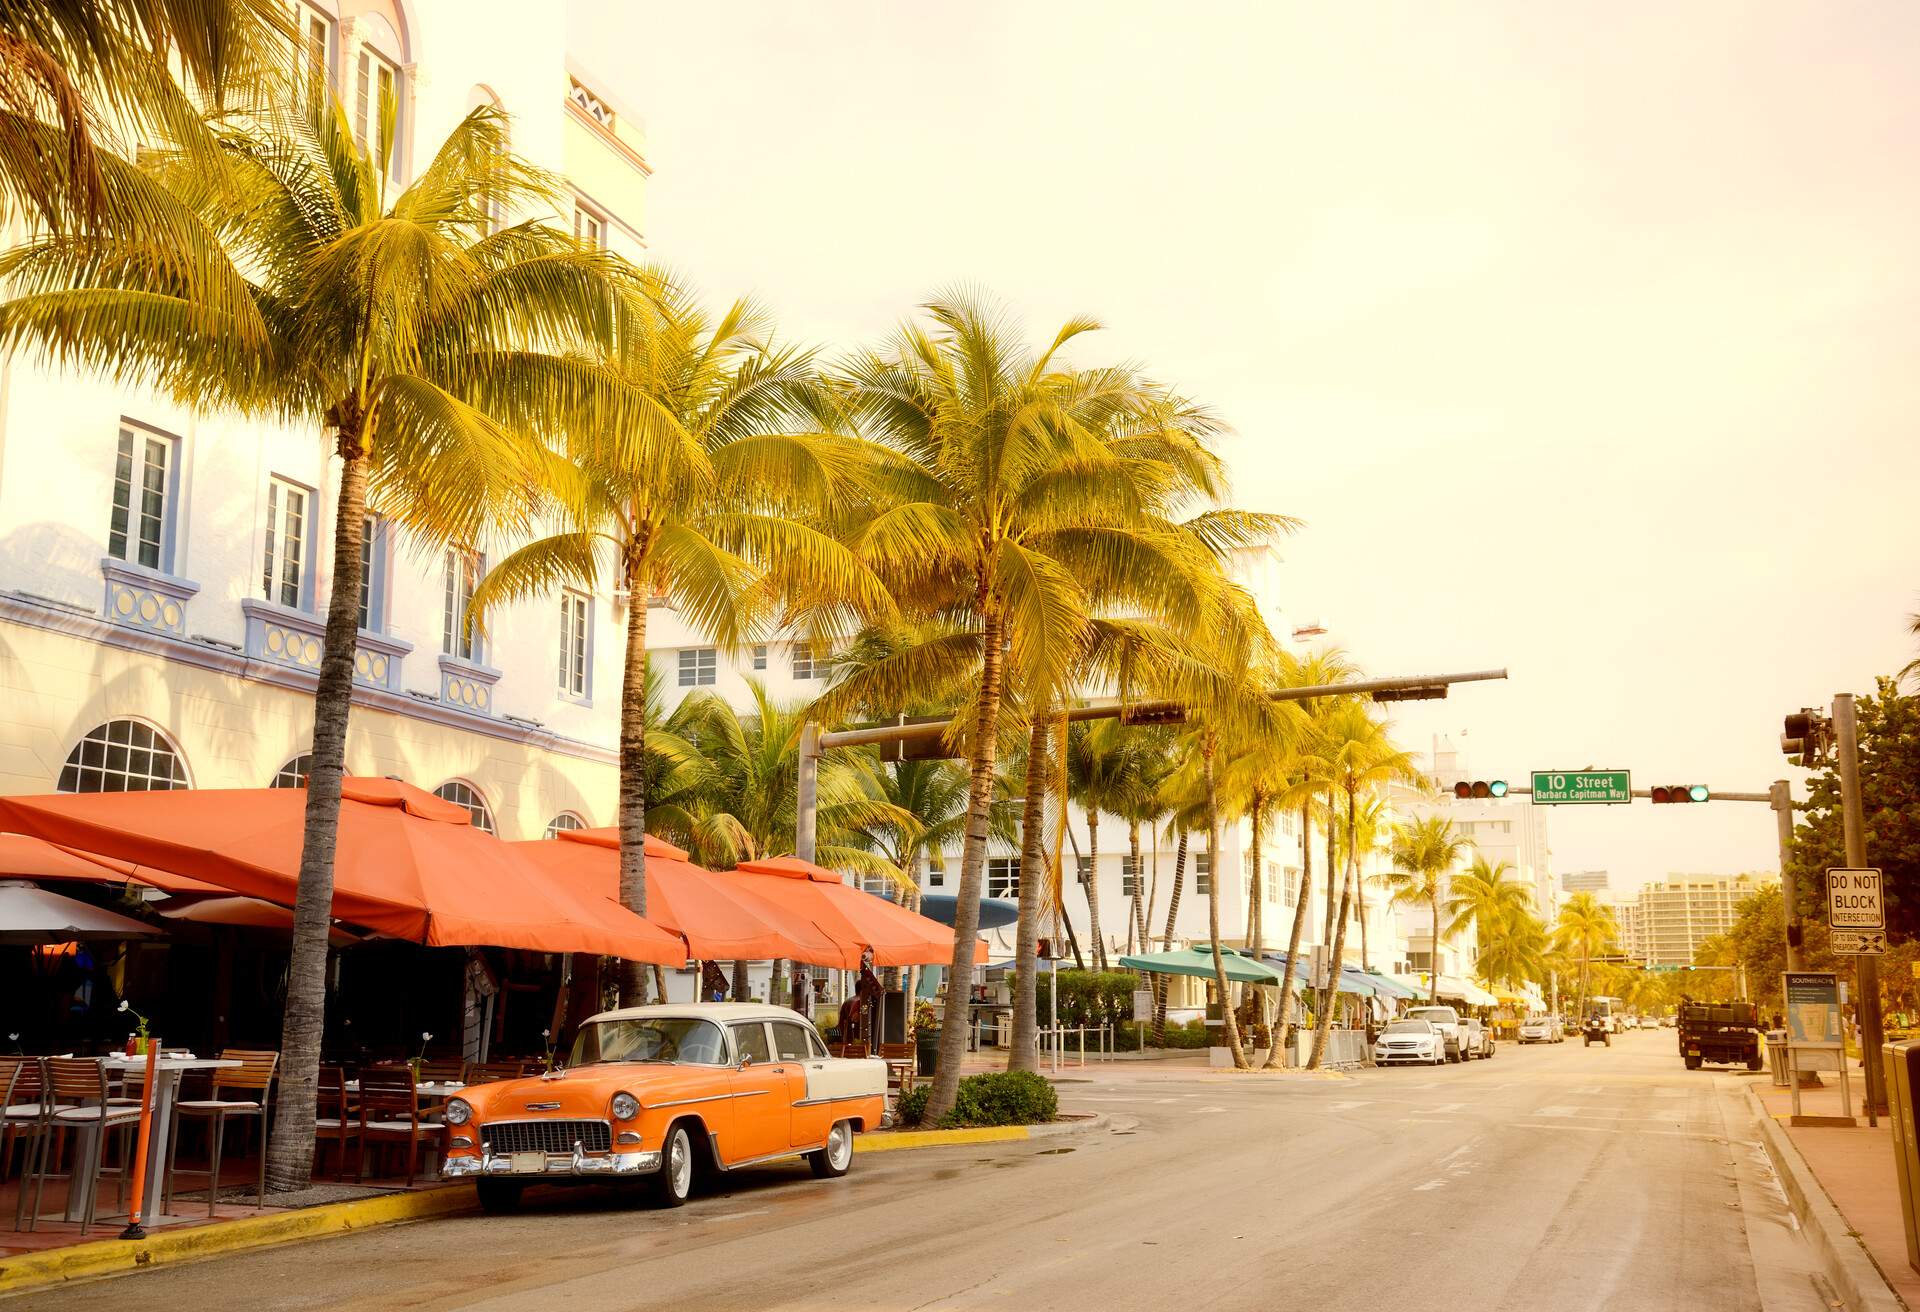 Ocean Drive, South Beach, Miami, Florida, USA